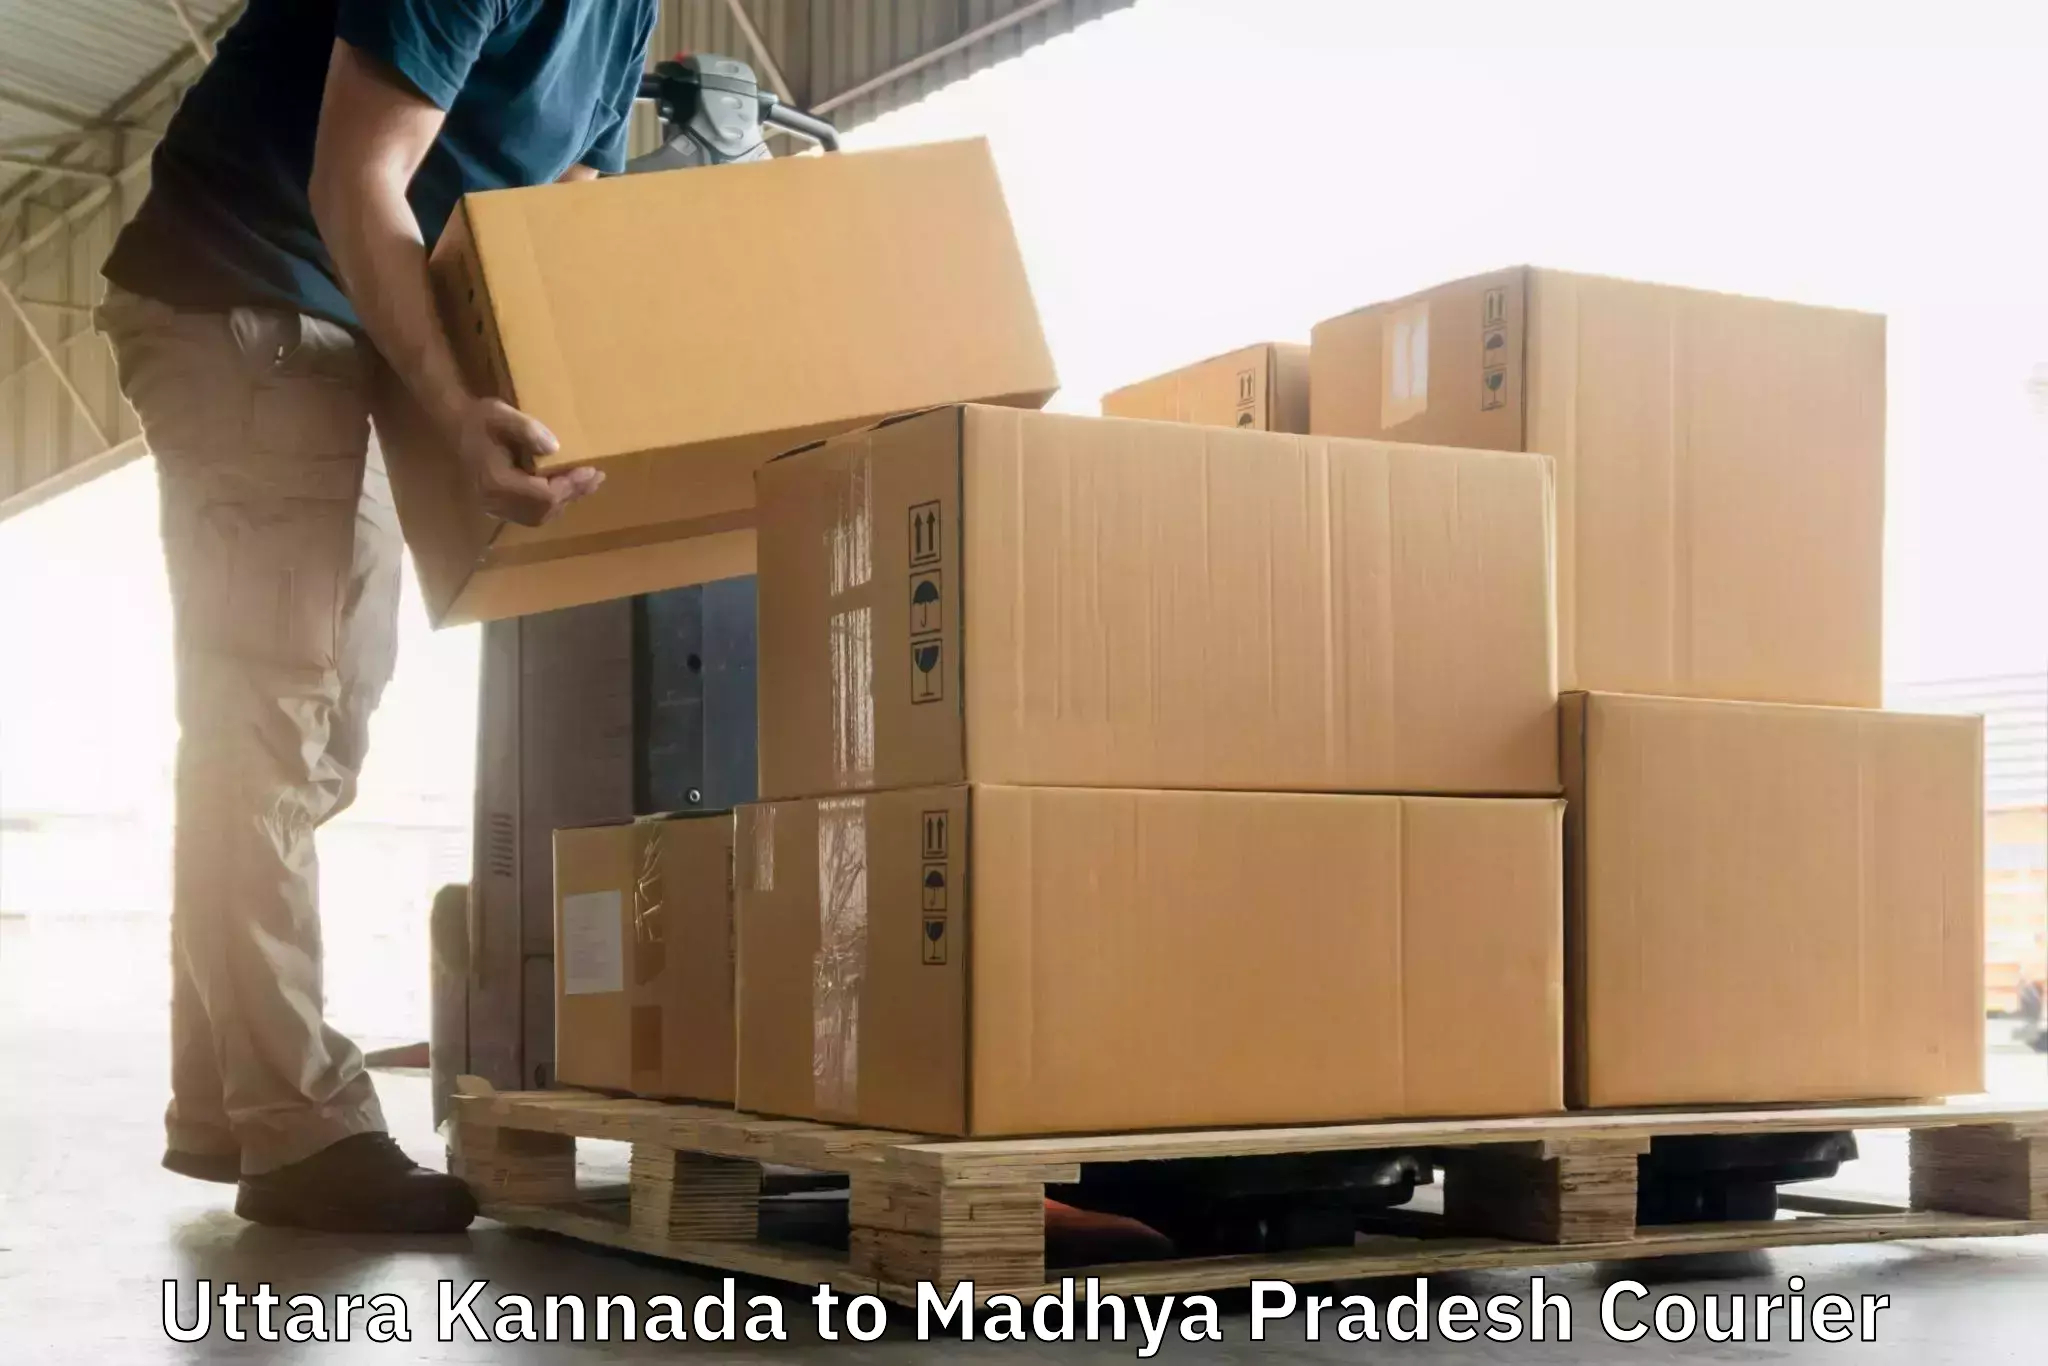 Global logistics network Uttara Kannada to Dindori